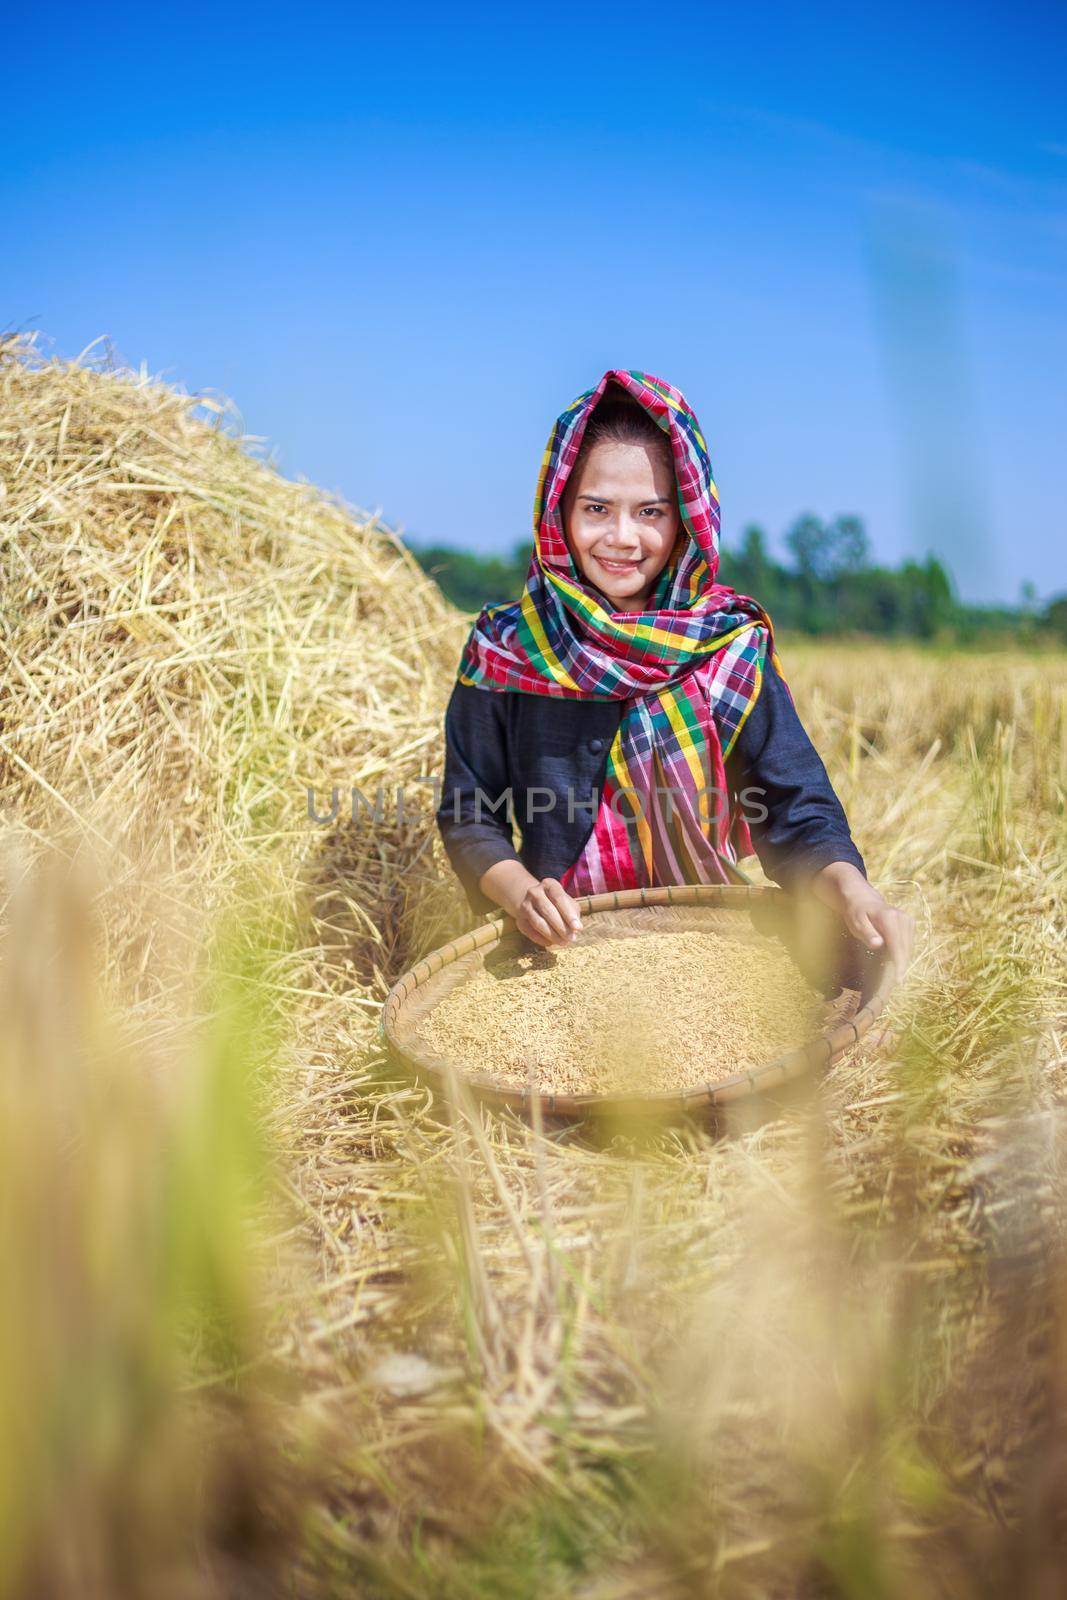 farmer woman threshed rice in field, Thailand